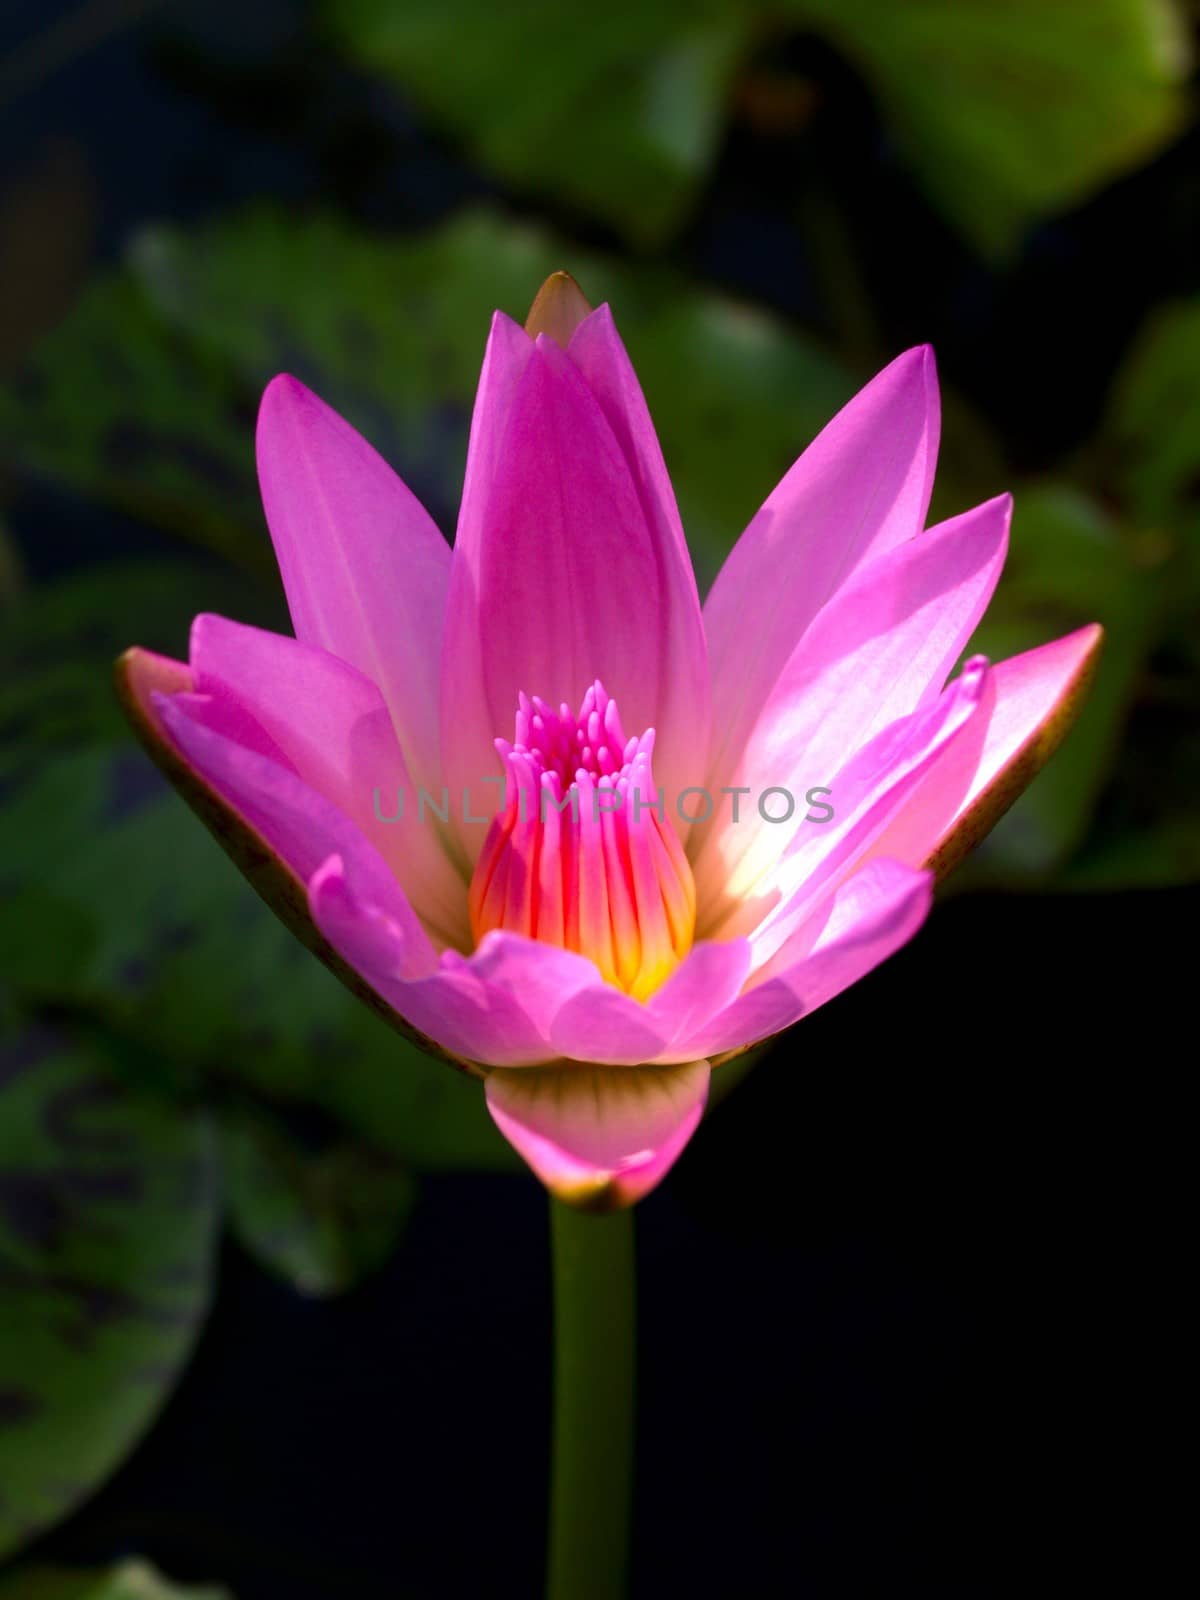 image of a lotus flower by kiddaikiddee